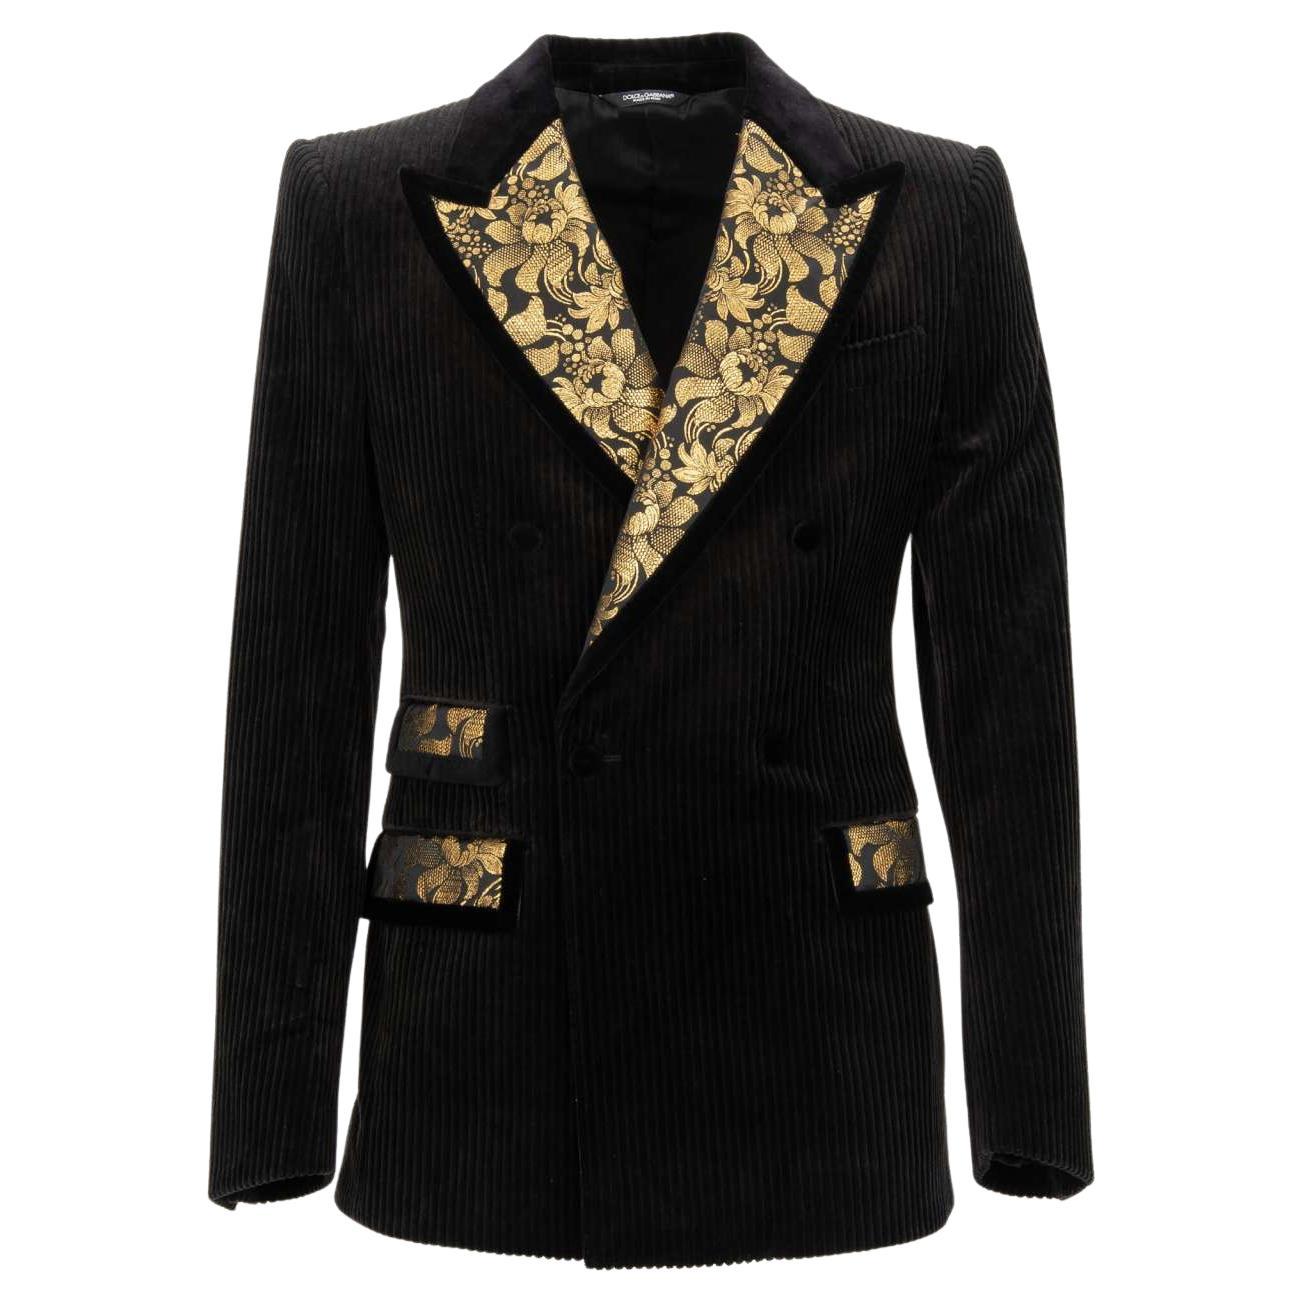 Dolce & Gabbana Floral Corduloy Blazer Tuxedo Jacket Black Gold 46 36 S For Sale